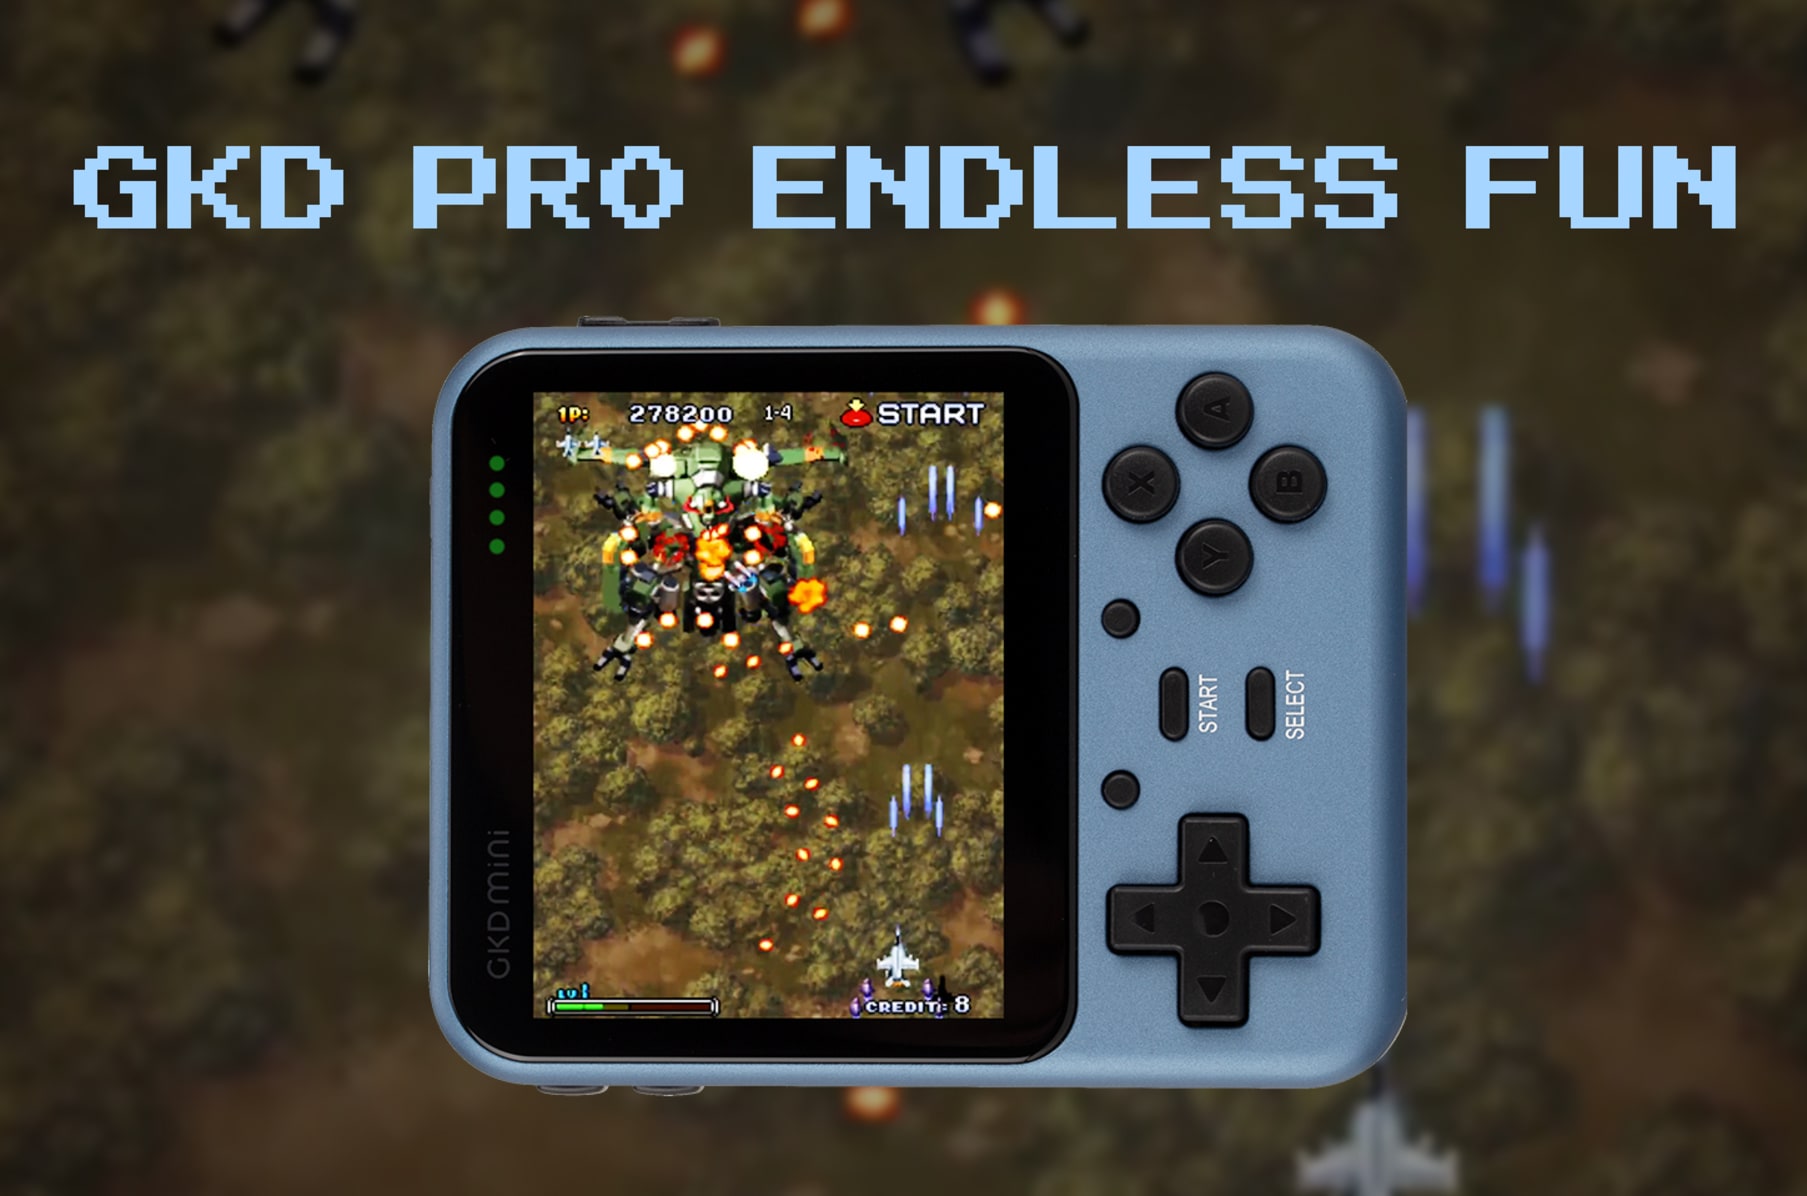 Gkd Pro Redesign Handheld Retro Game Console Indiegogo